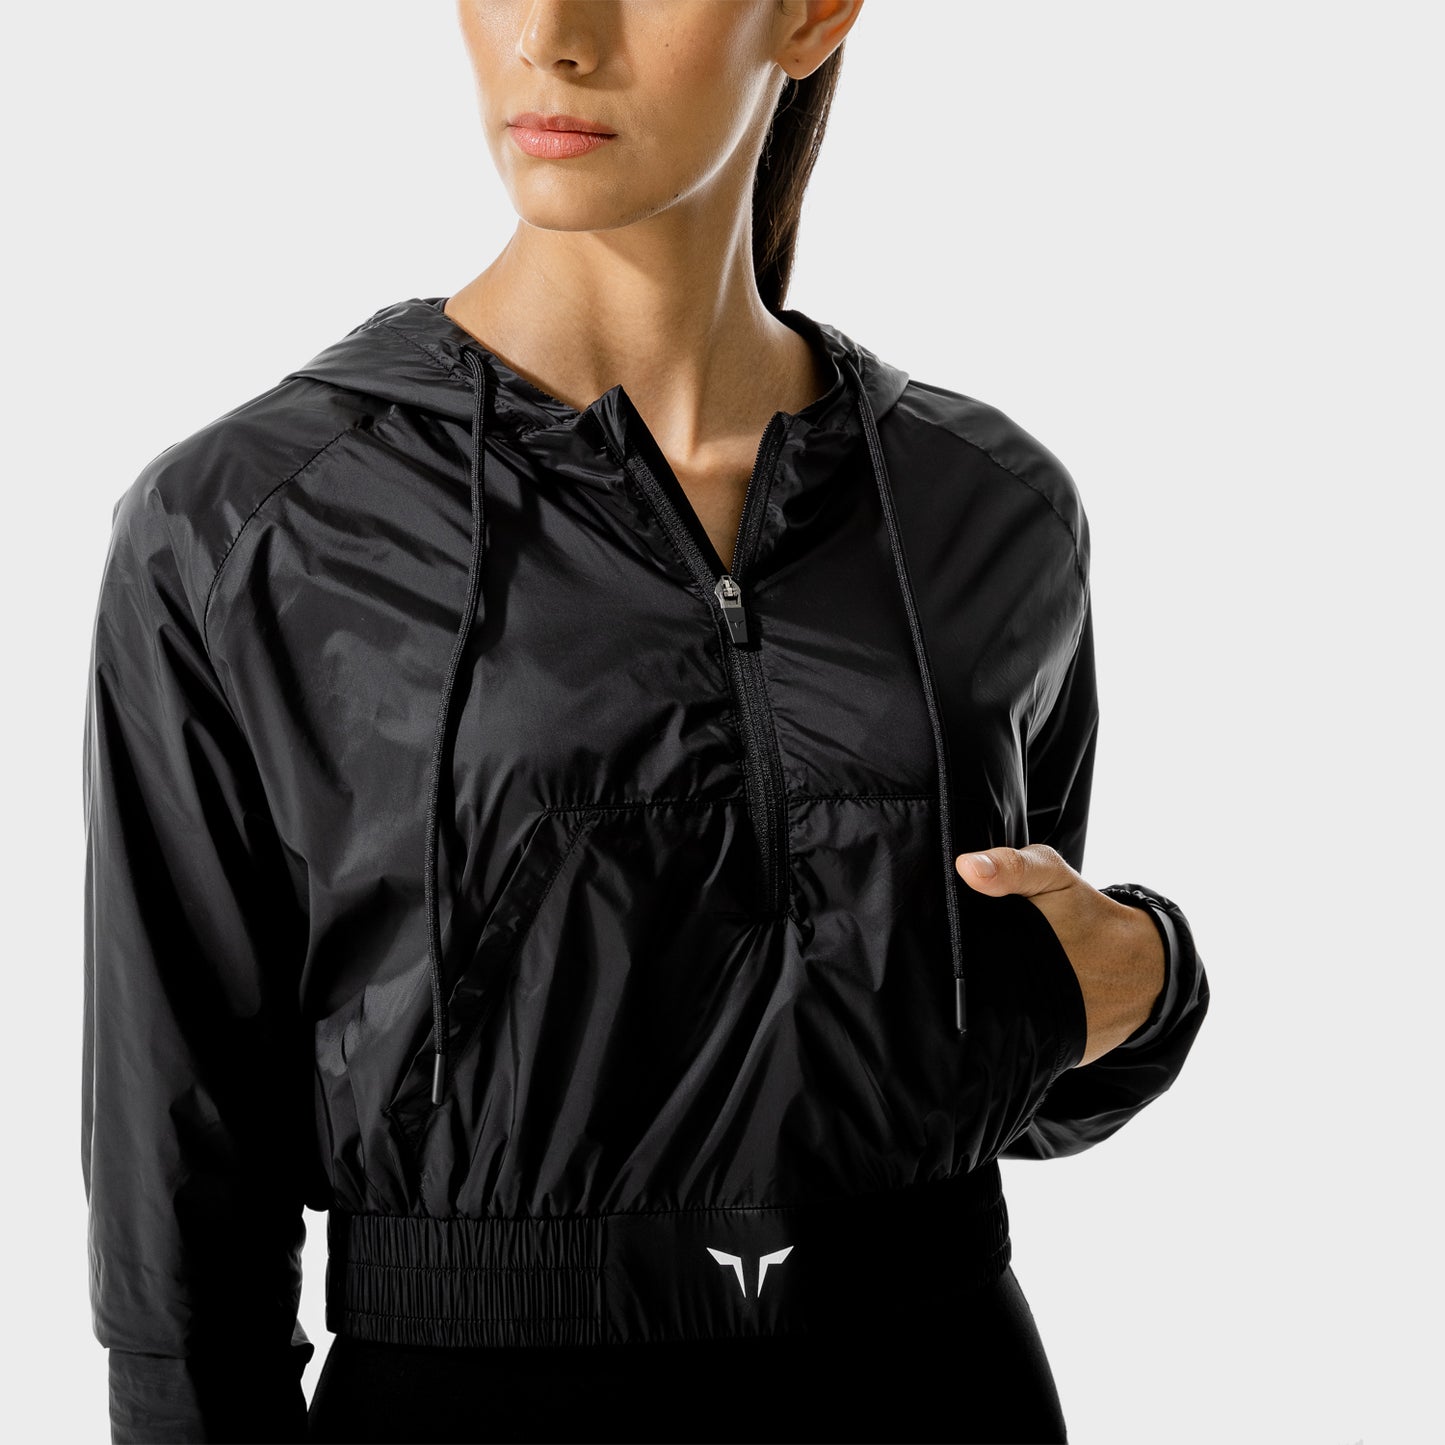 squatwolf-gym-hoodies-women-lab-360-crop-jacket-black-workout-clothes